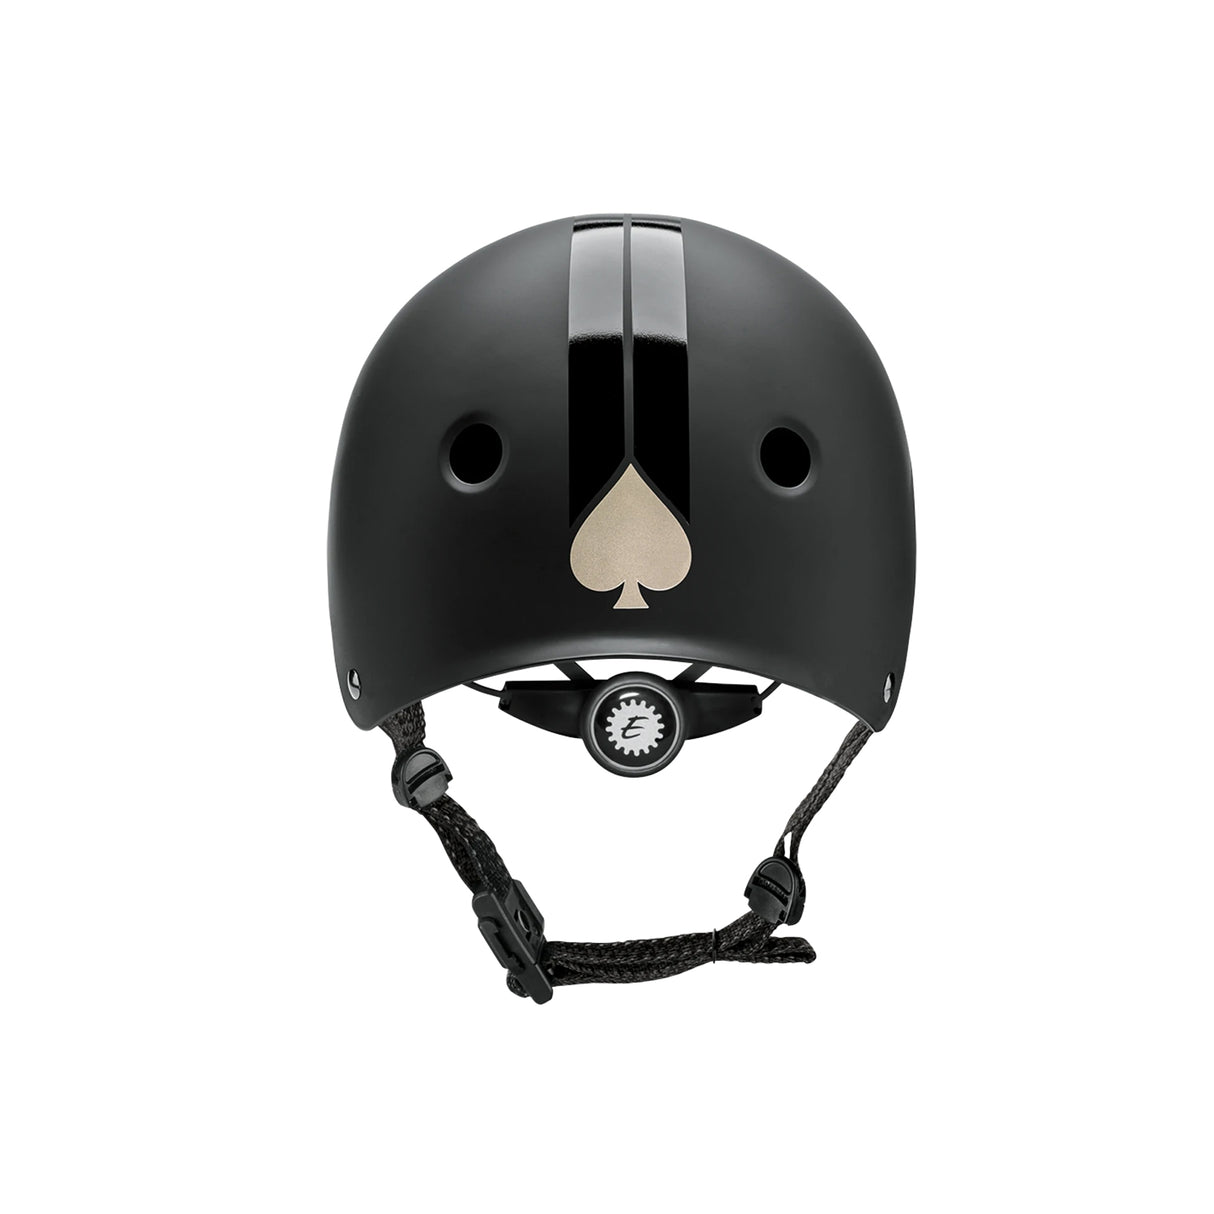 Electra Lifestyle Lux Ace Bike Helmet